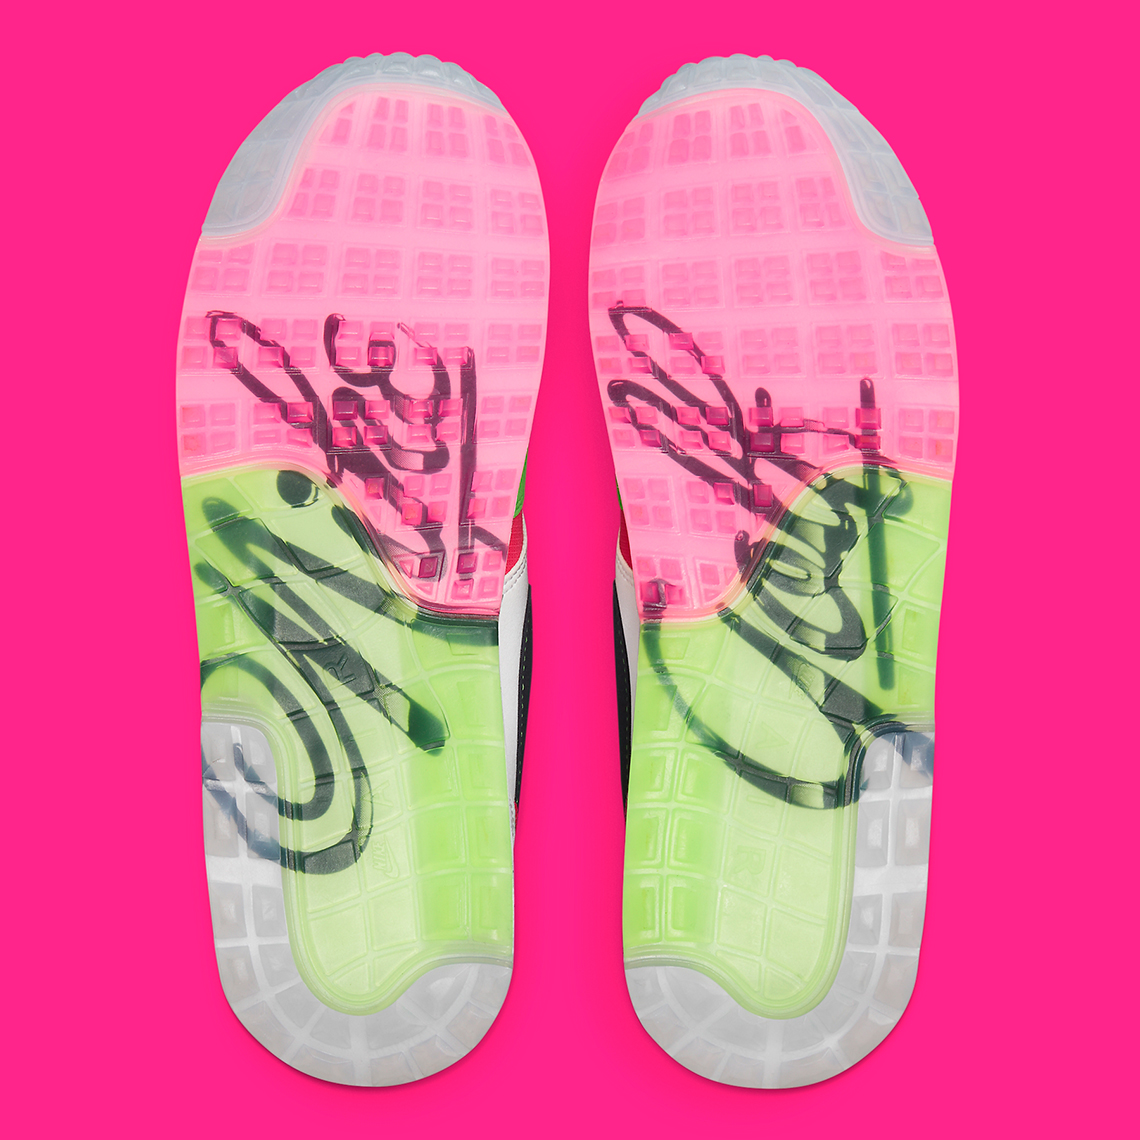 Nike nike air max foamdome boot for sale Airbrush Green Pink 1